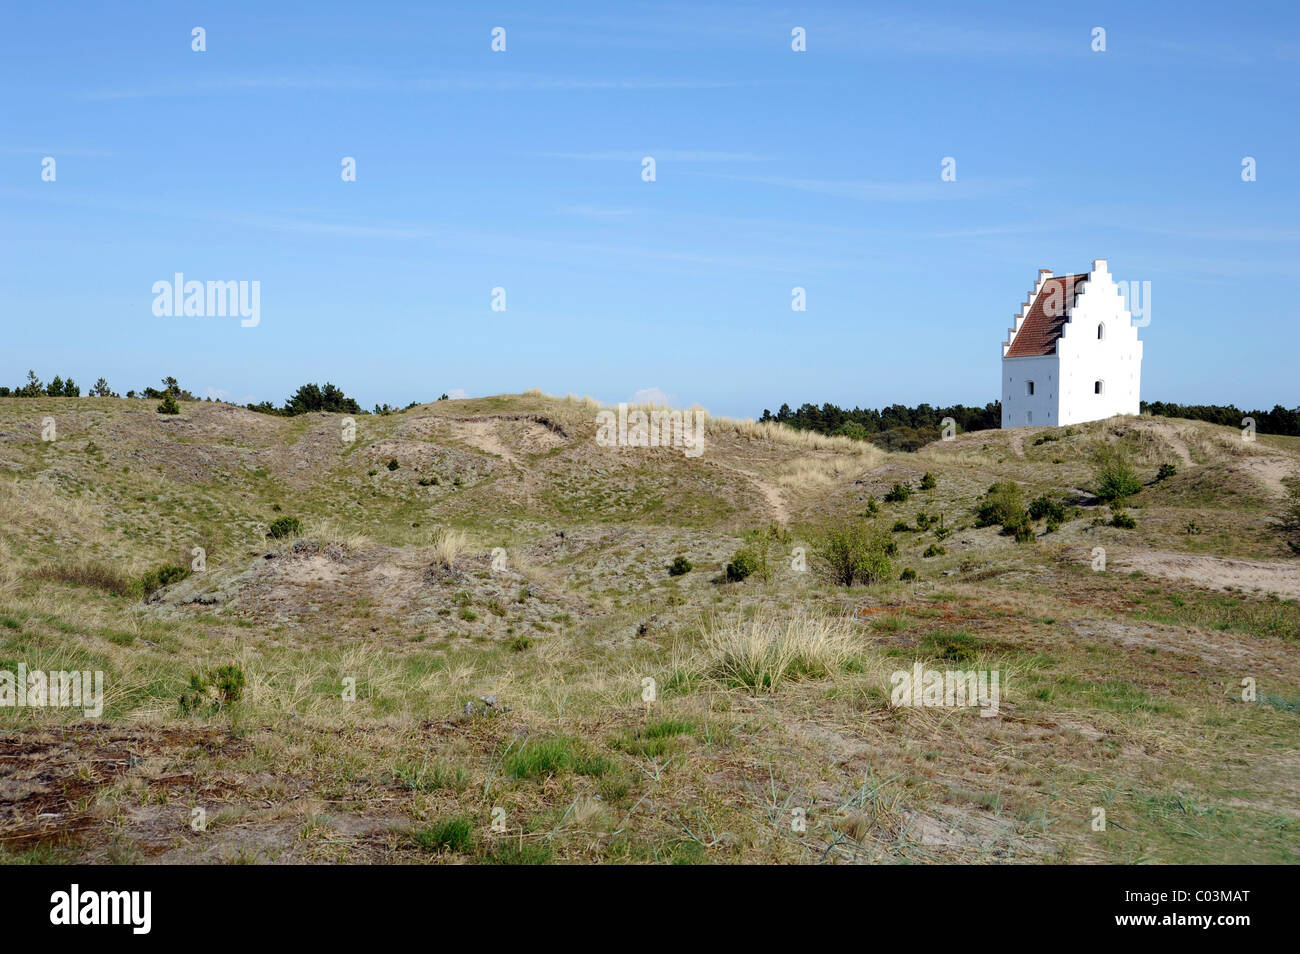 Dünen an der Umdrehung von Sand verschlungen Buried Kirche, Skagen, Jütland, Dänemark, Europa Stockfoto